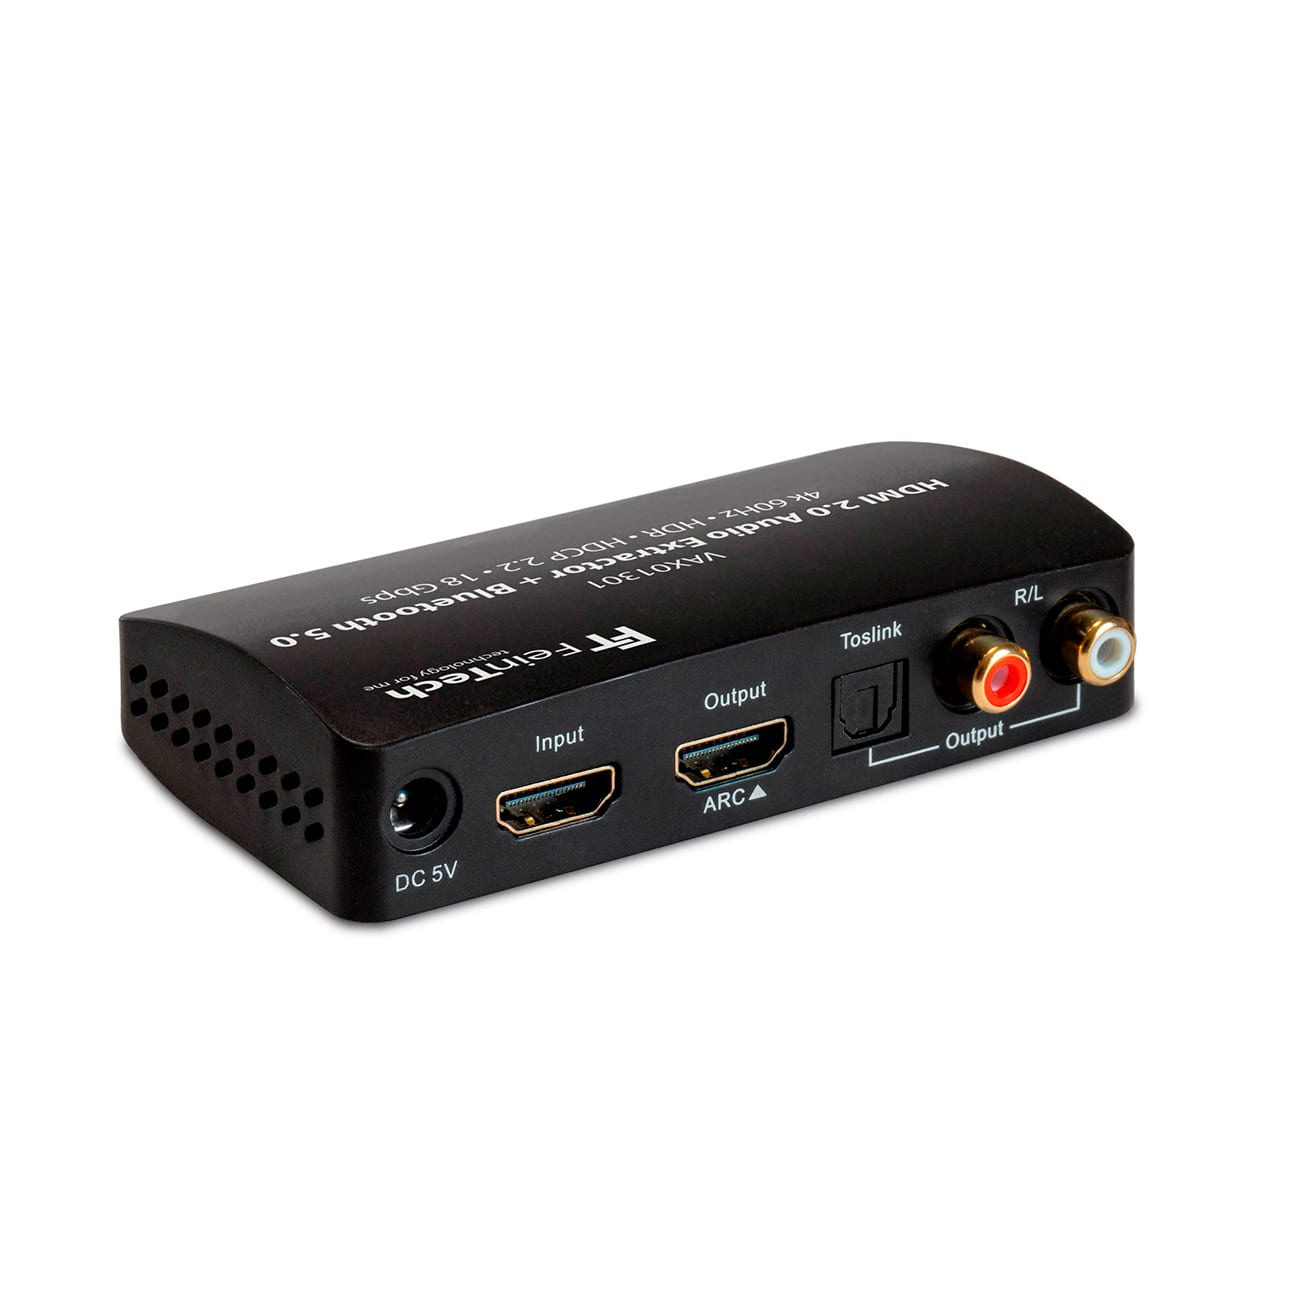 FeinTech HDMI Audio Extractor Bluetooth